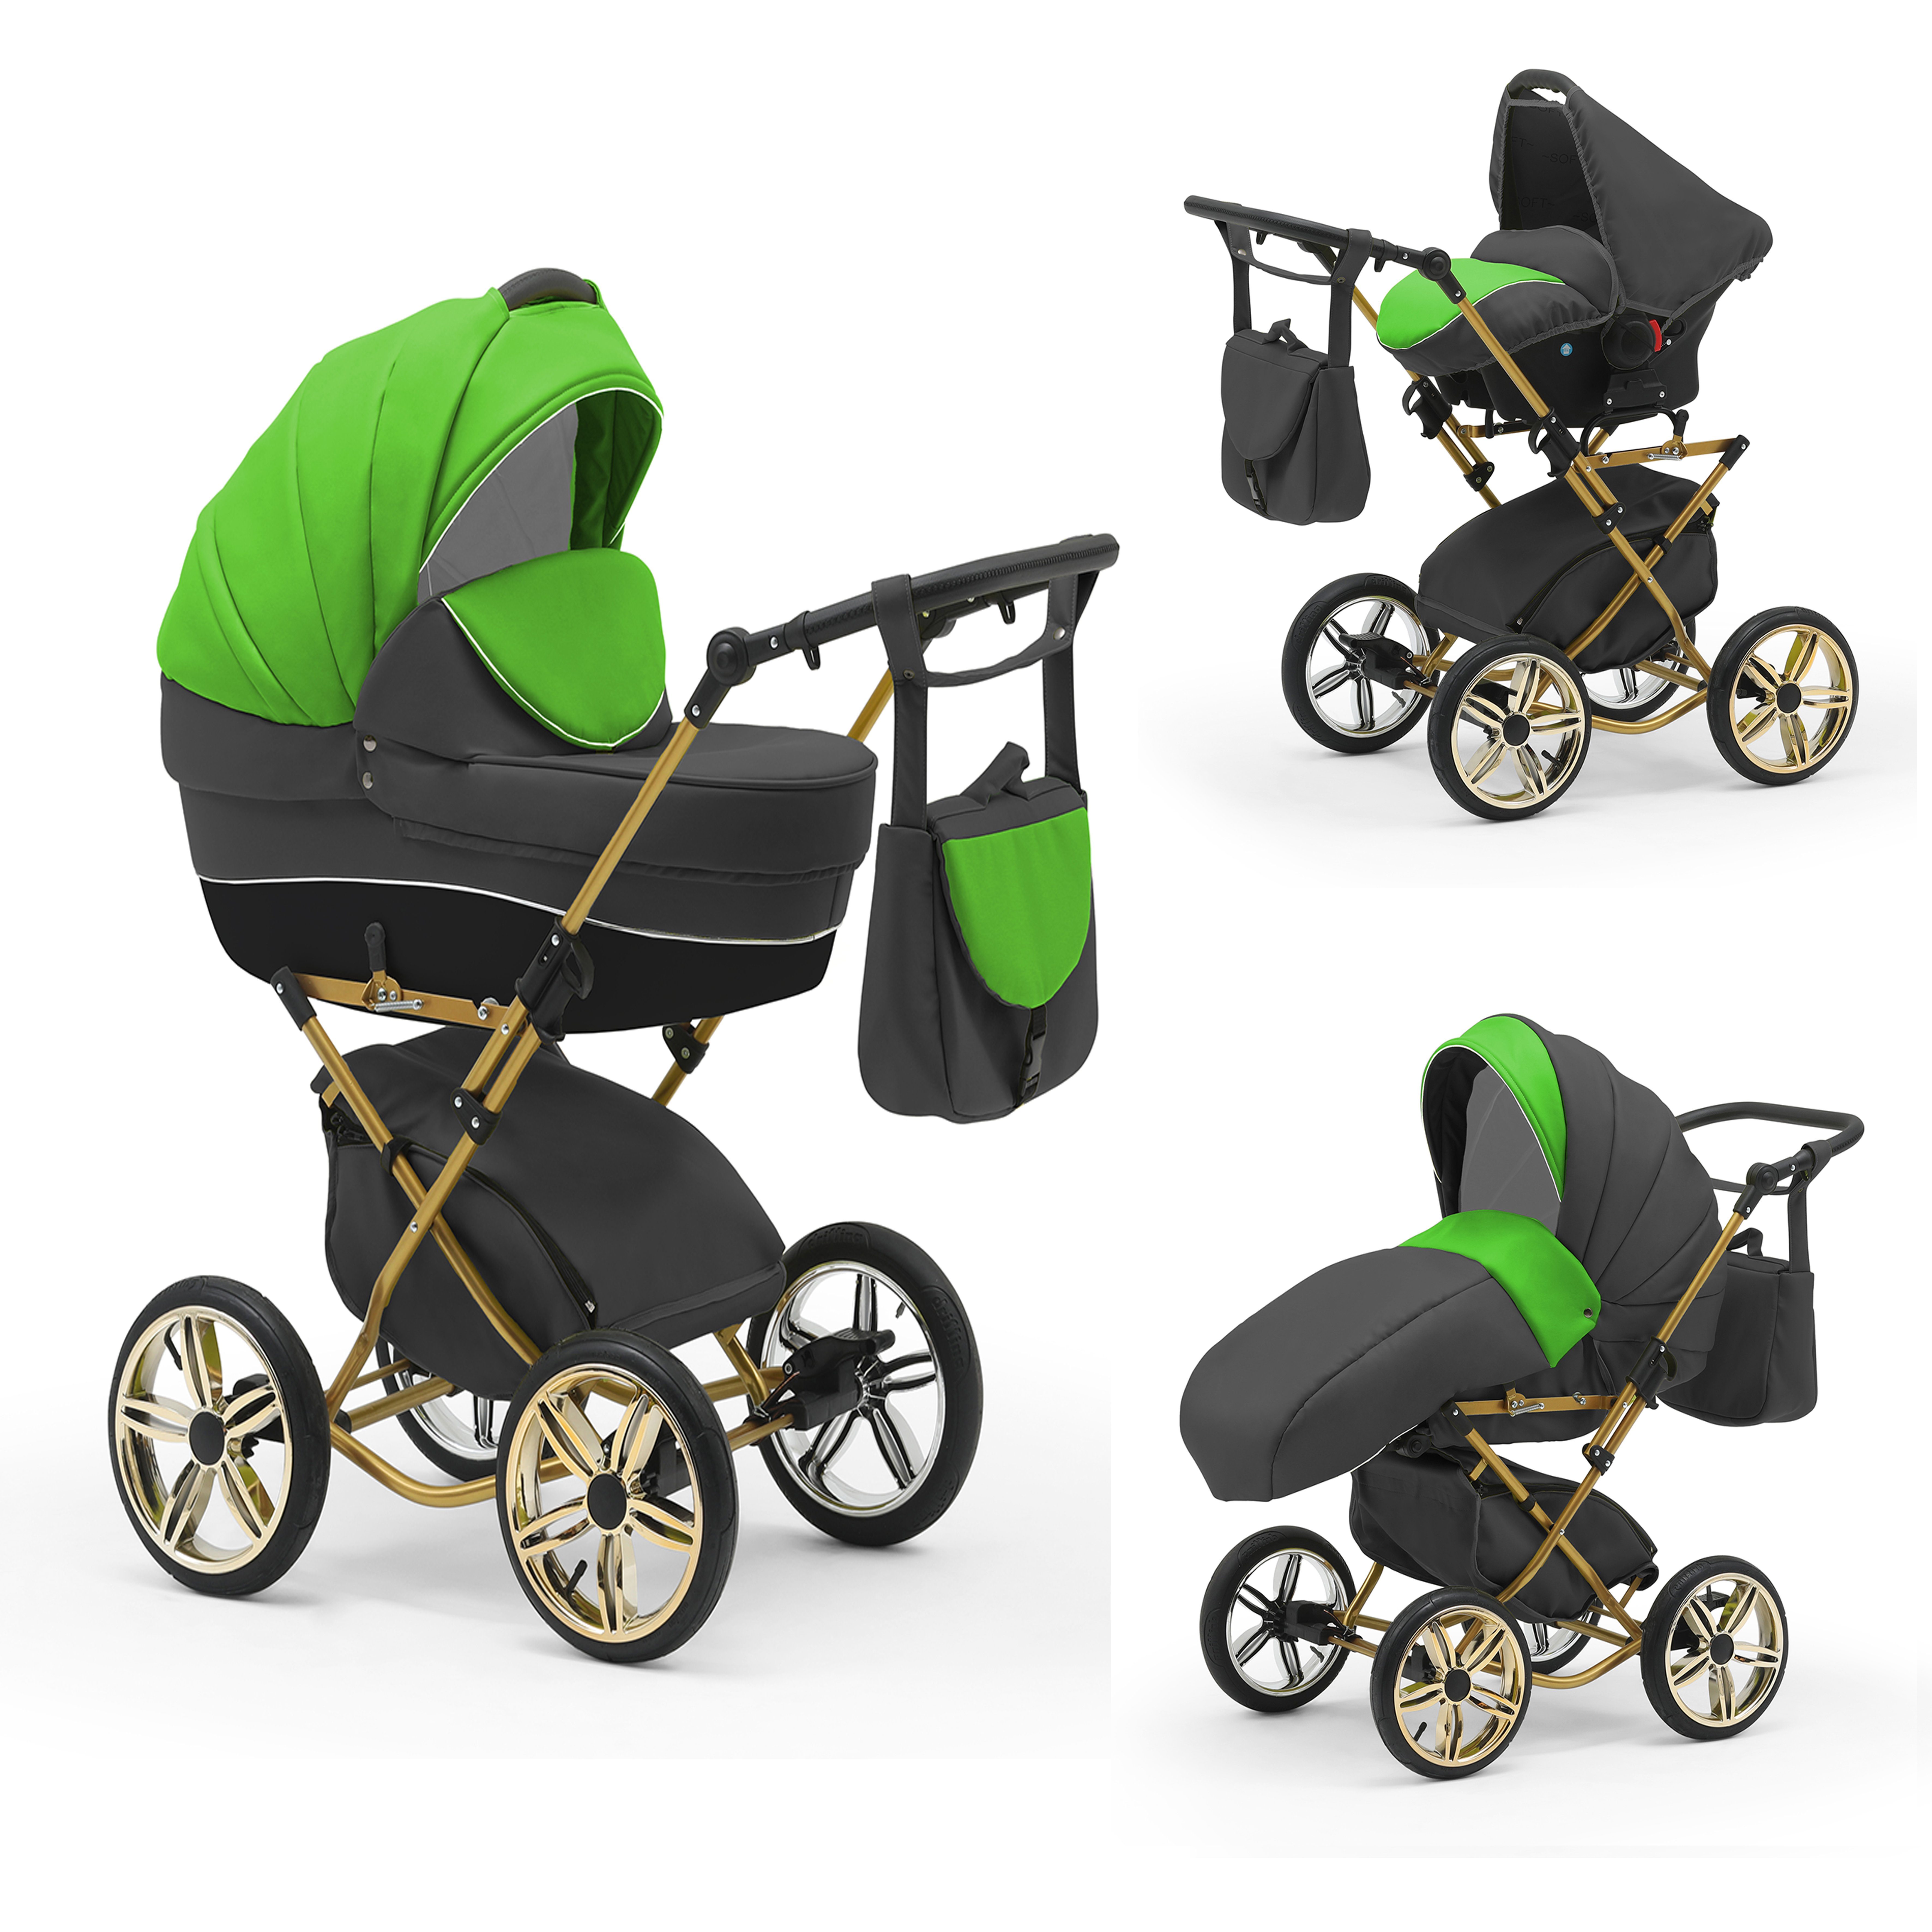 babies-on-wheels Kombi-Kinderwagen Sorento 3 in 1 inkl. Autositz - 13 Teile - in 10 Designs Grün-Grau